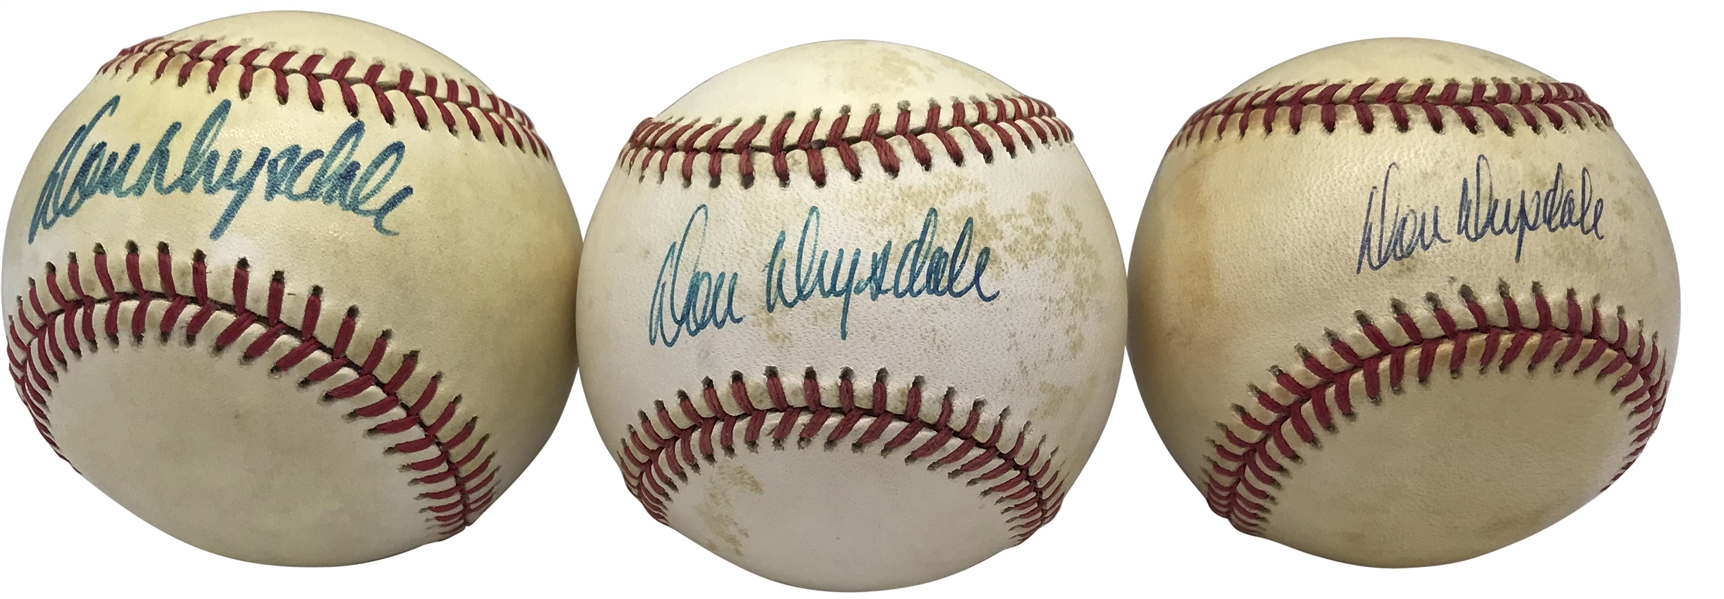 Don Drysdale Lot of Three (3) Signed ONL Baseballs (PSA/DNA, JSA, & BAS Guaranteed)